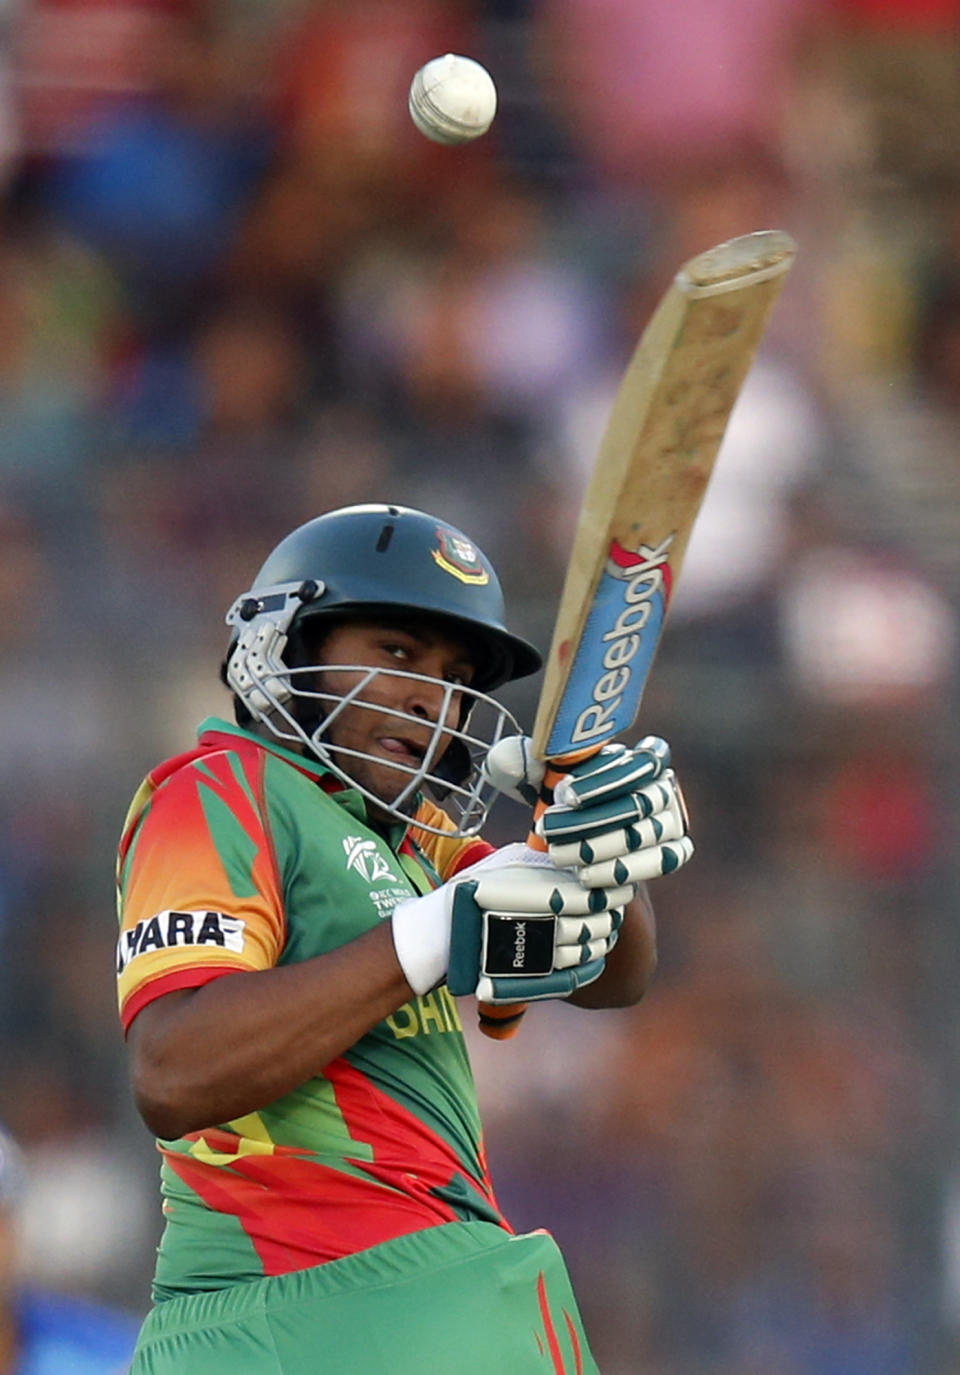 Bangladesh's batsman Shakib Al Hasan plays a shot during their ICC Twenty20 Cricket World Cup opening match against Afghanistan in Dhaka, Bangladesh, Sunday, March 16, 2014. (AP Photo/Aijaz Rahi)